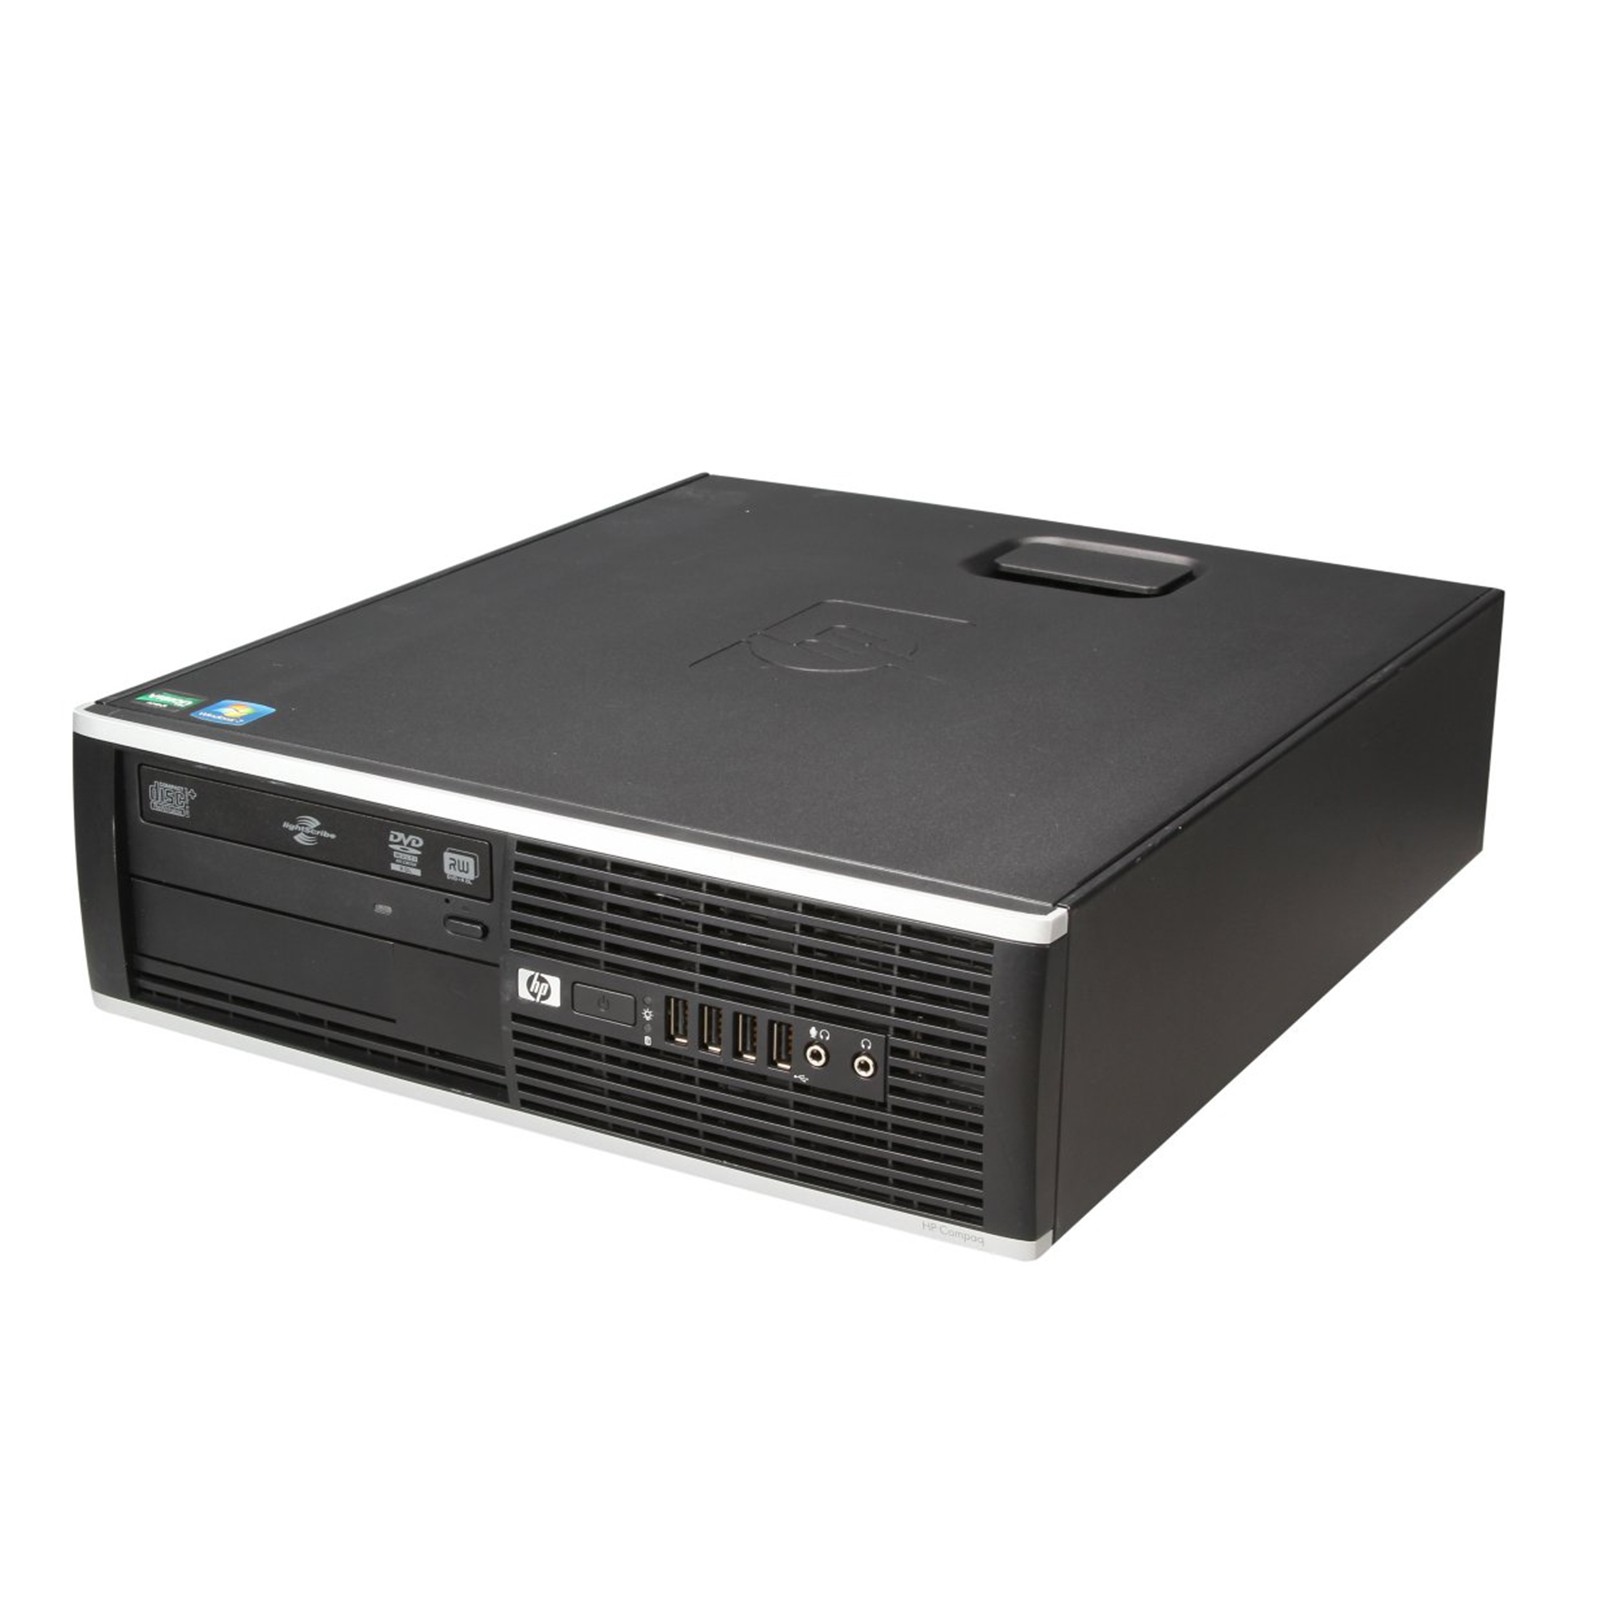 HP Compaq 6005 Pro SFF Top